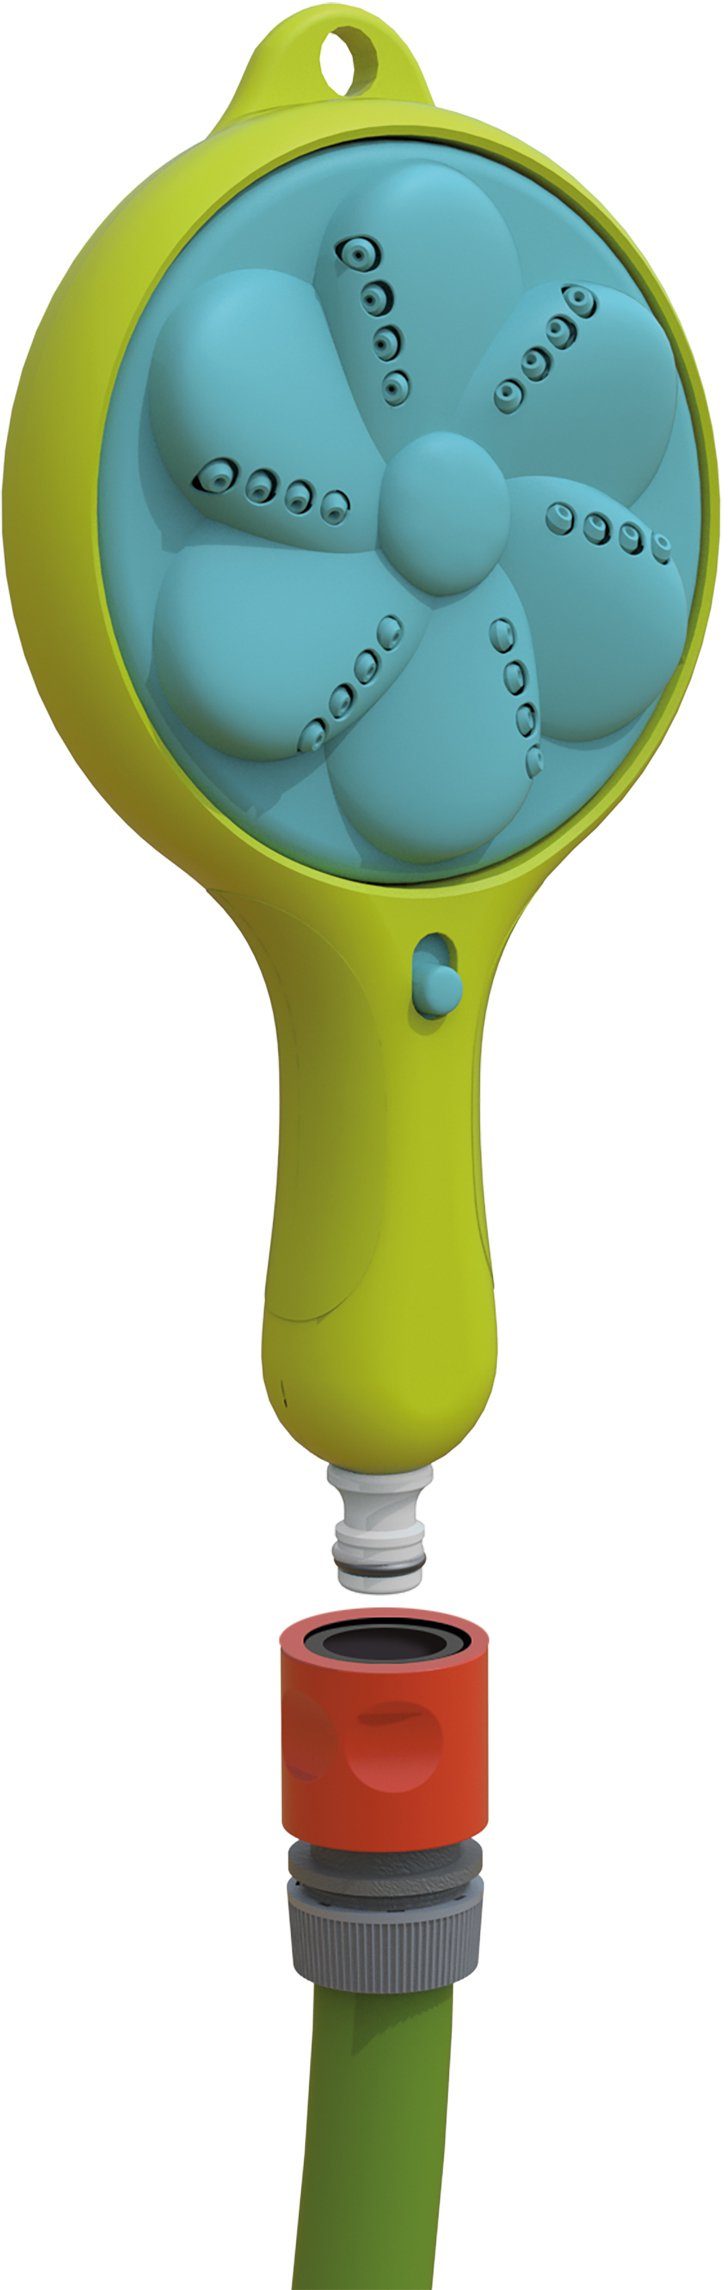 Smoby Spiel-Wassersprenkler 3in1 Gartendusche, Made in Europe